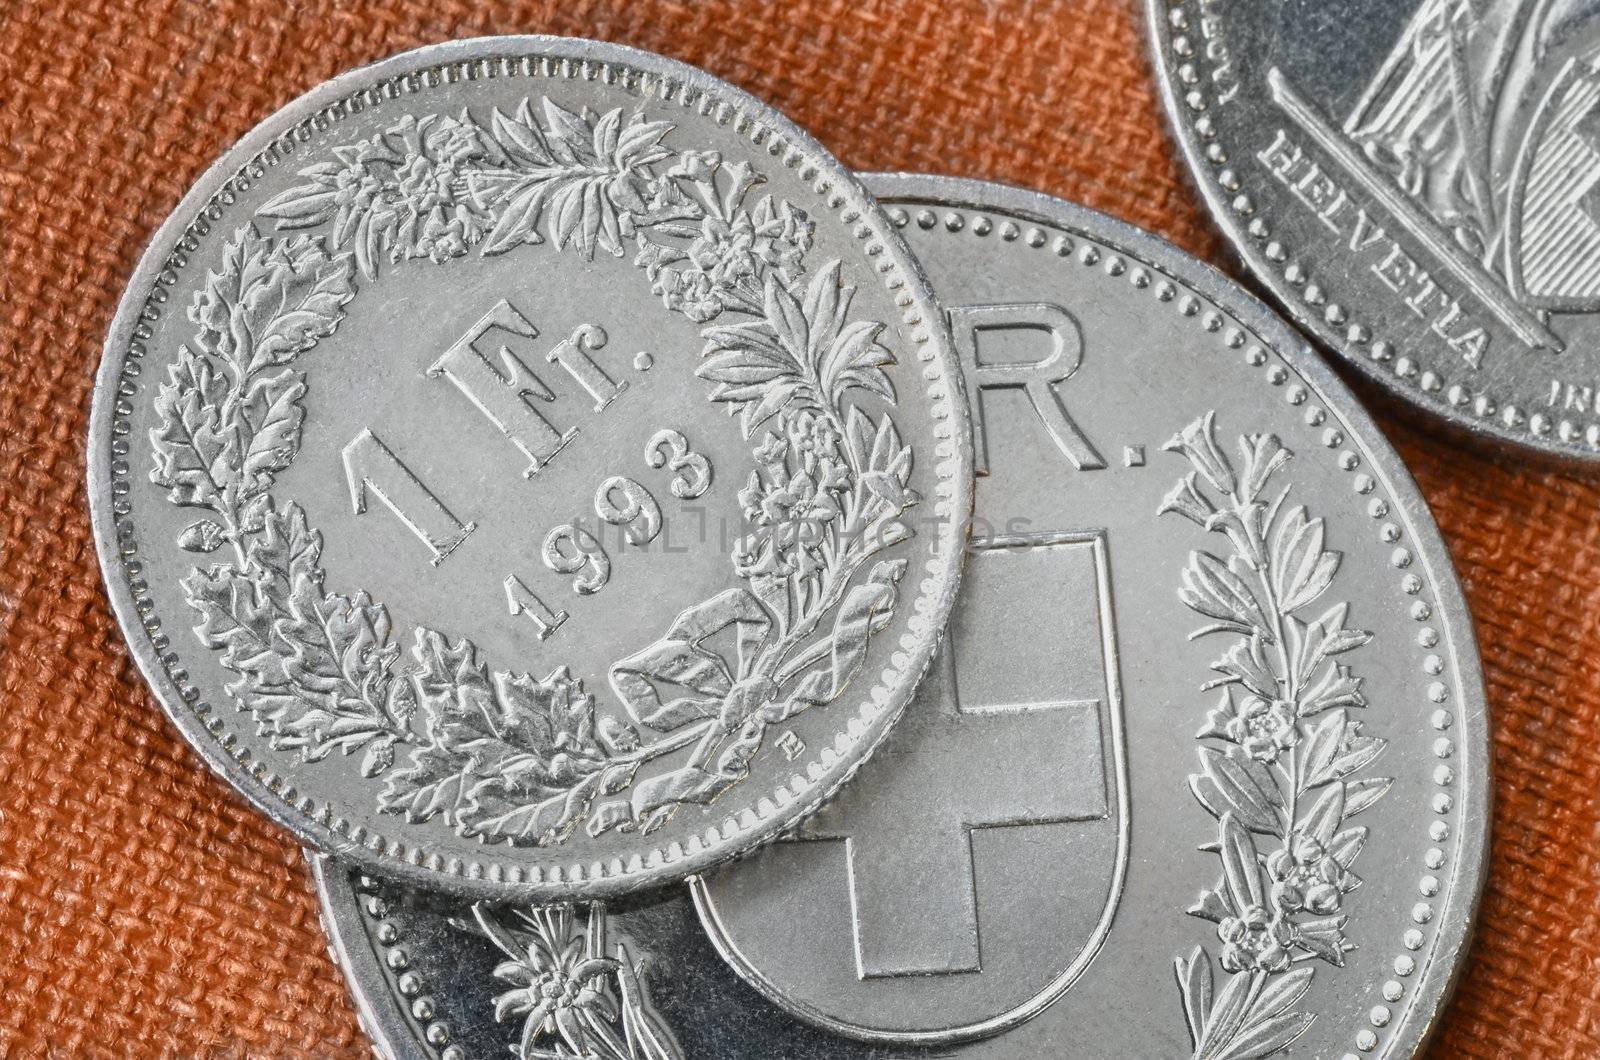 Swiss coins by Vectorex